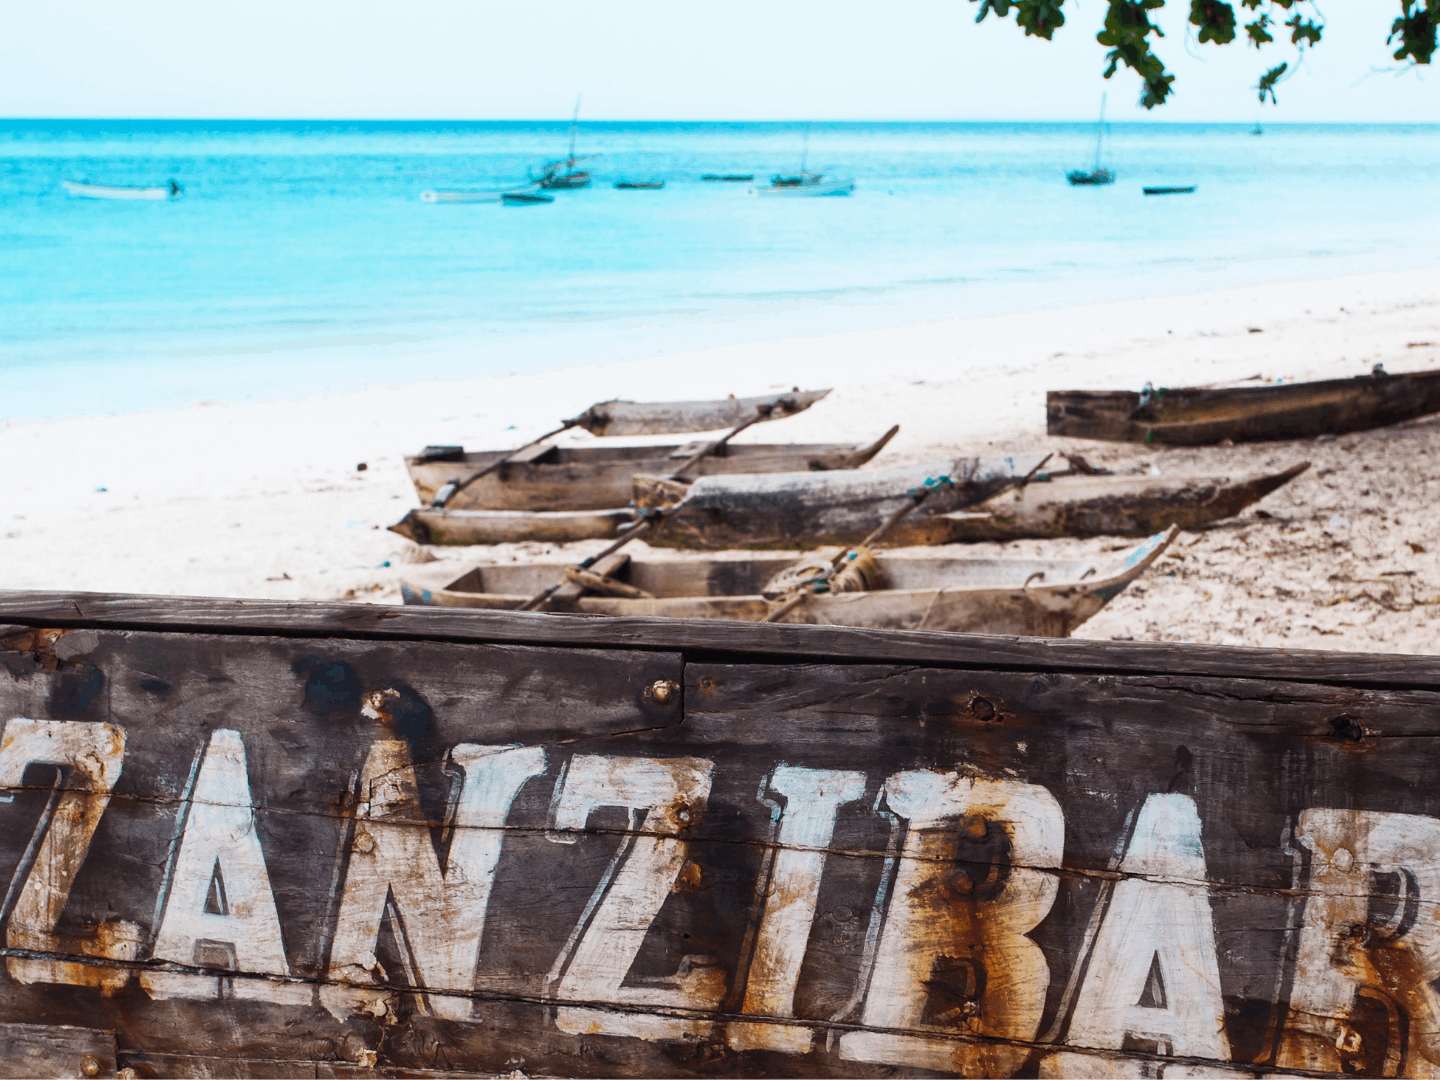 Kwaheri Tanzania - Si vola a Zanzibar, arrivederci al prossimo Safari!